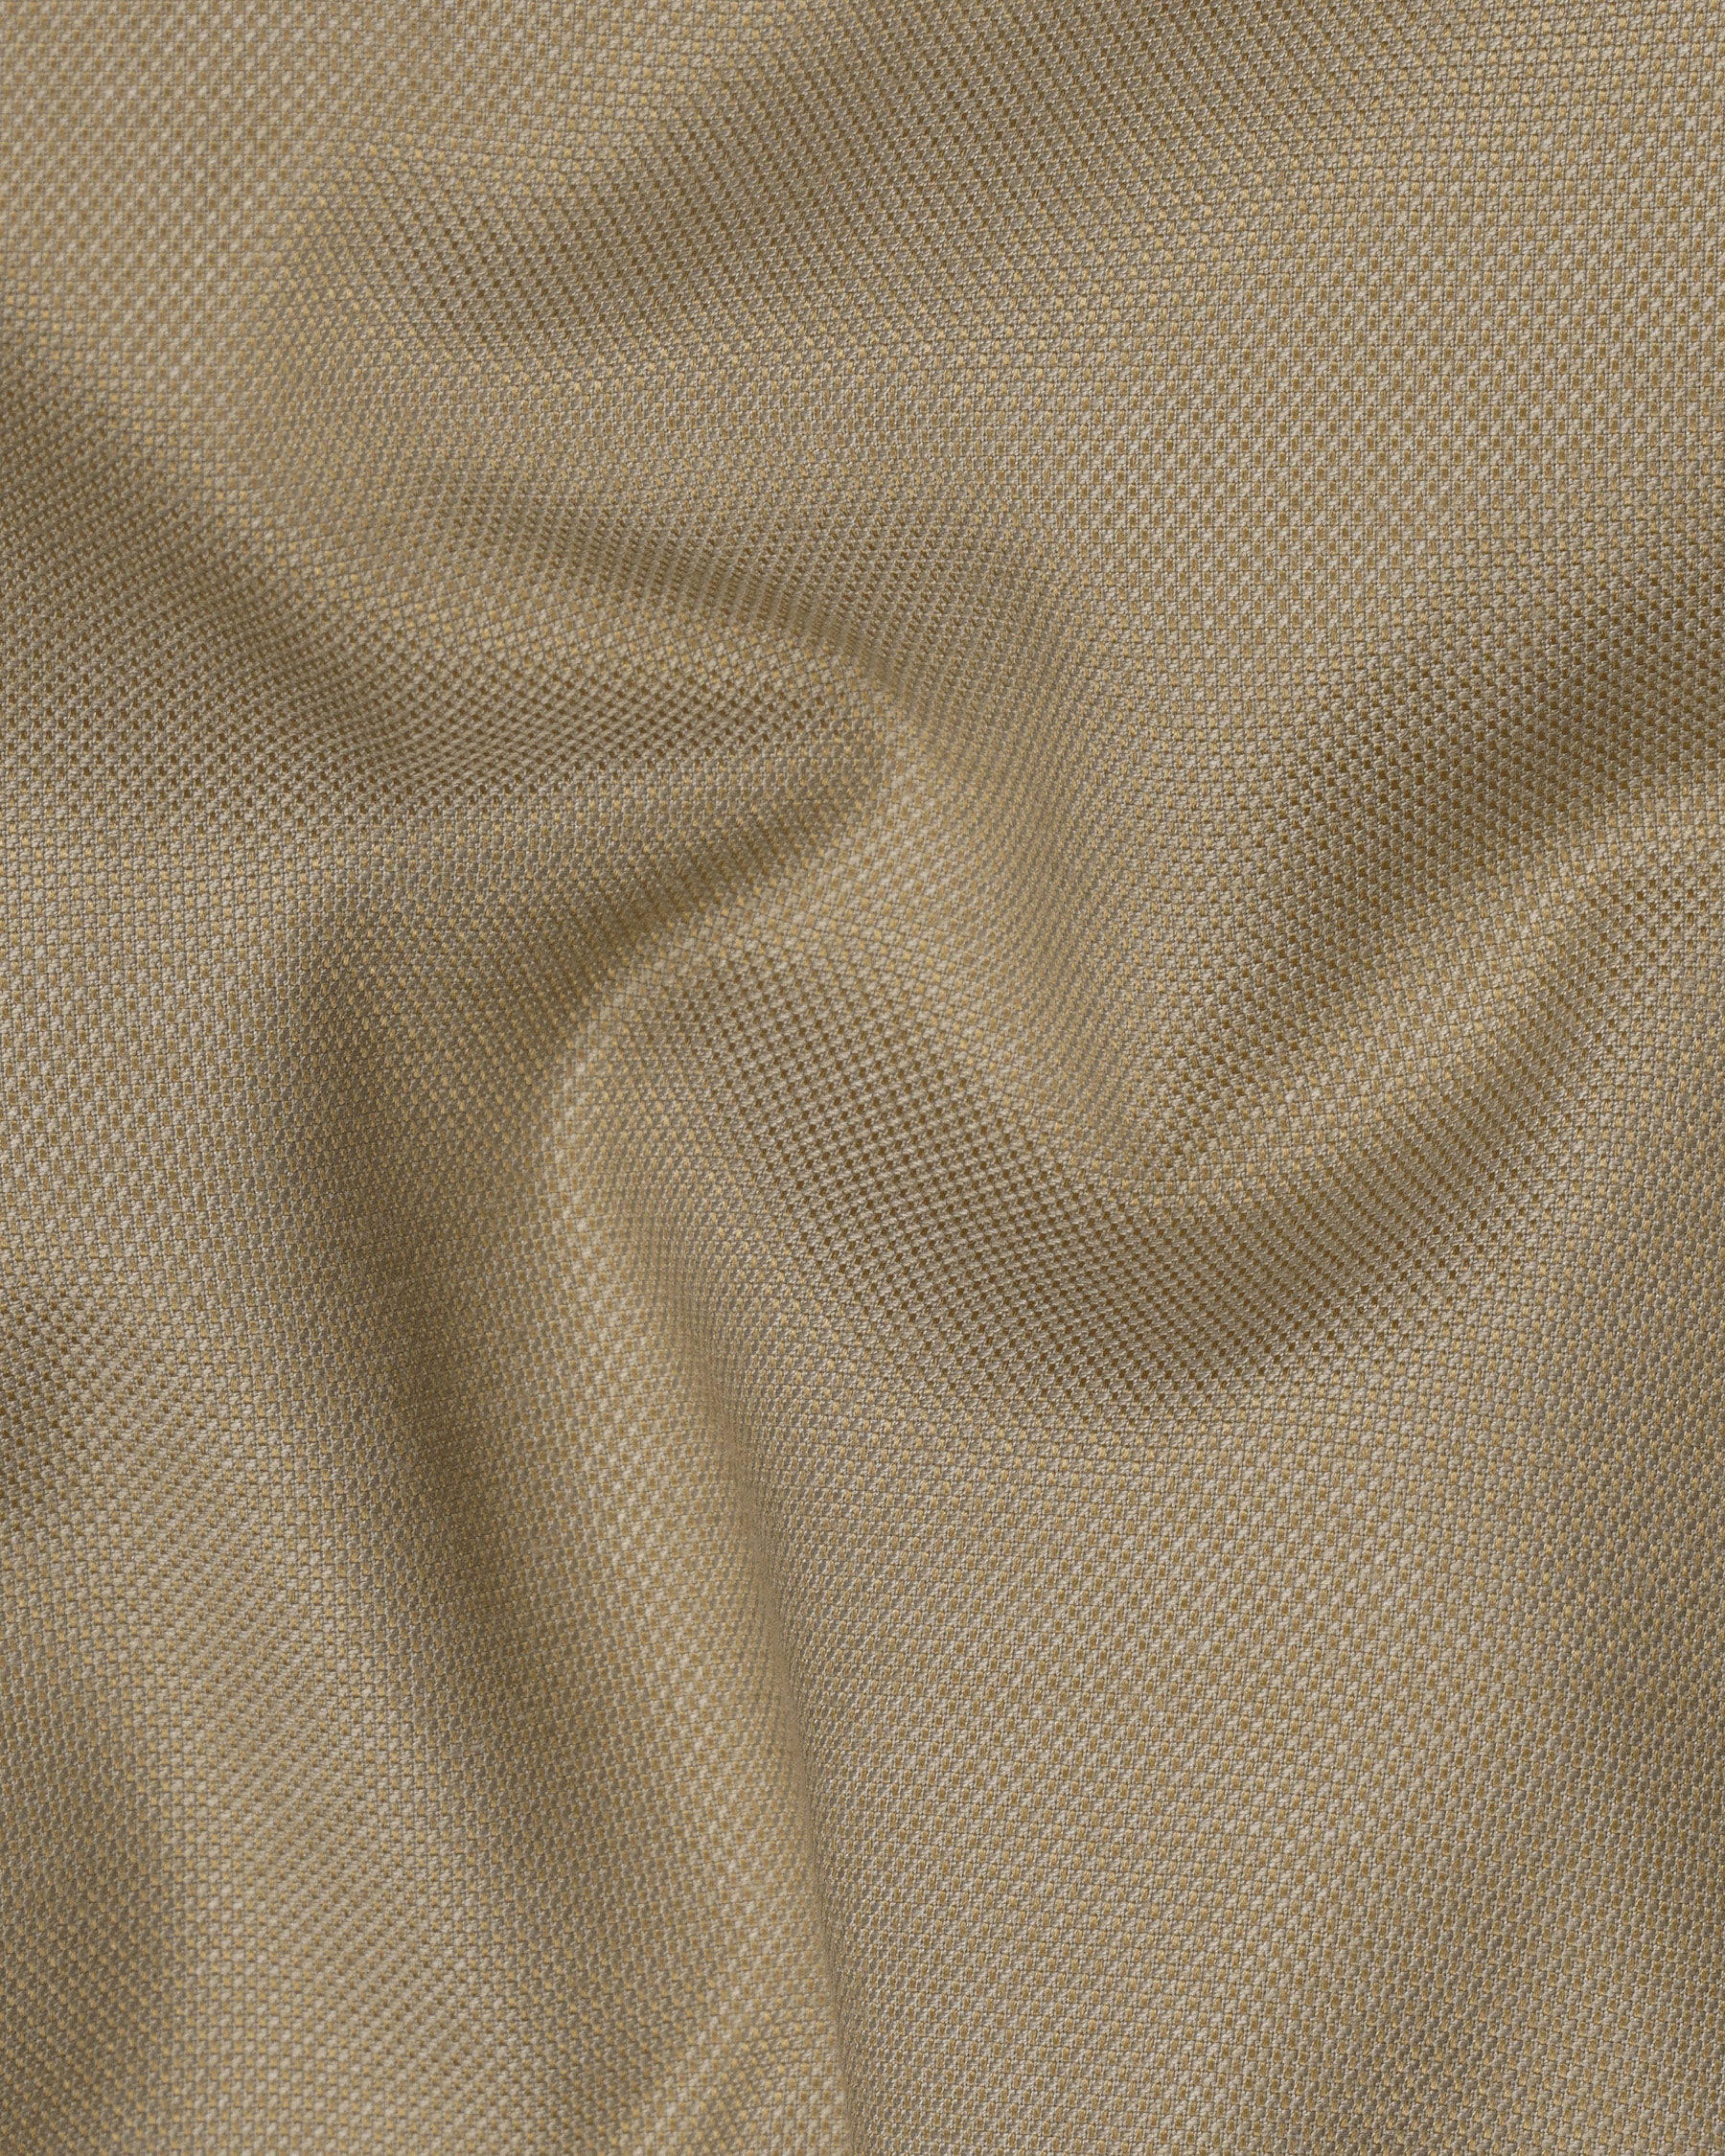 Tallow Brown Textured Pant T2026-28, T2026-30, T2026-32, T2026-34, T2026-36, T2026-38, T2026-40, T2026-42, T2026-44